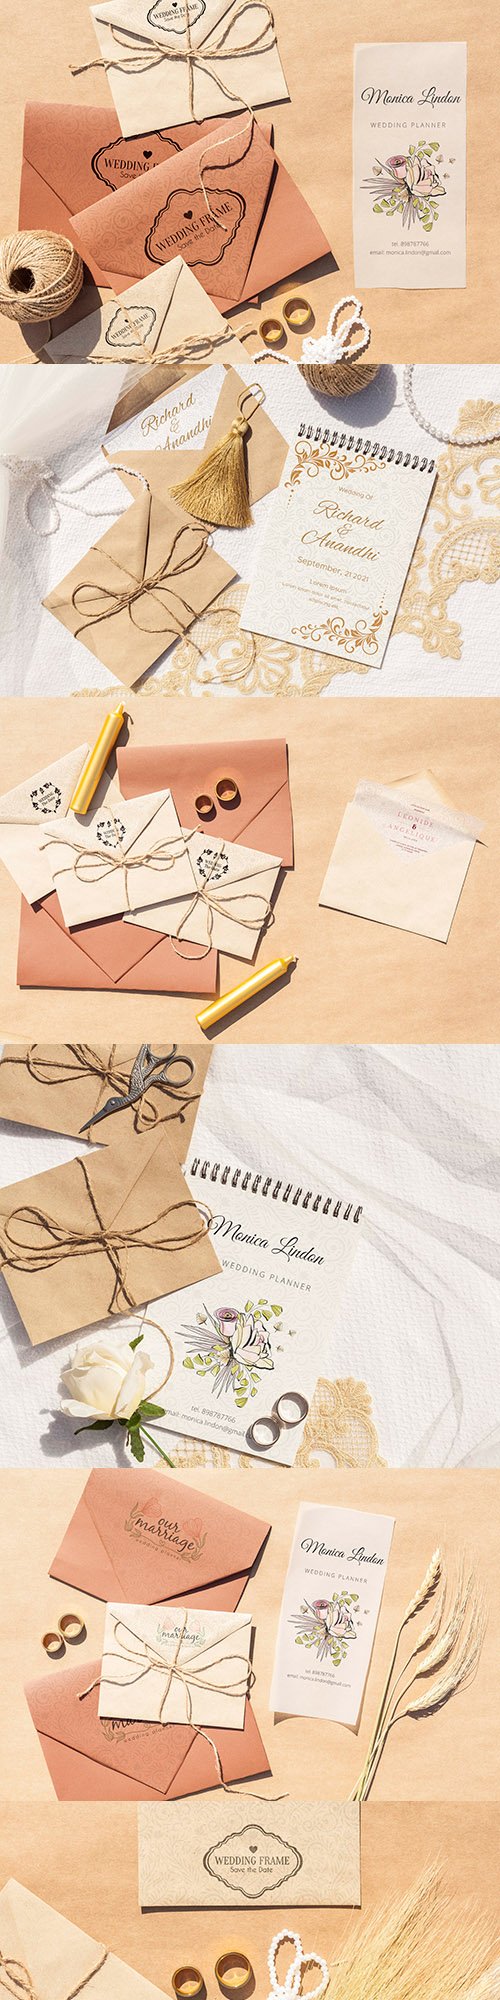 Vintage wedding invitations with brown paper envelopes